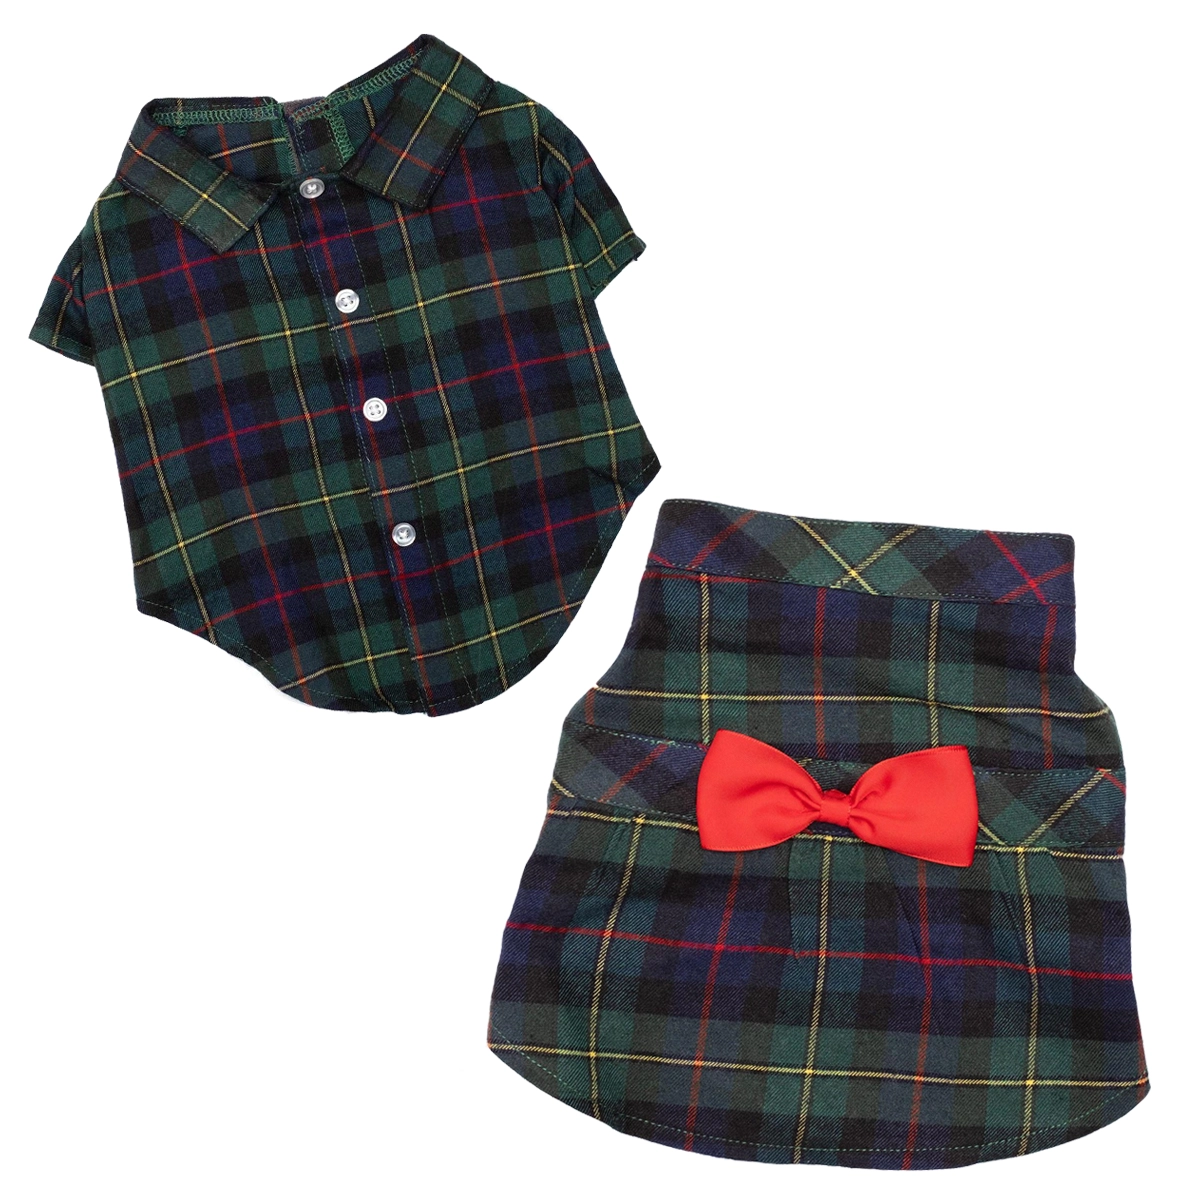 Fashion Bundle - Macleod Tartan Flannel Dog Shirt and Dress